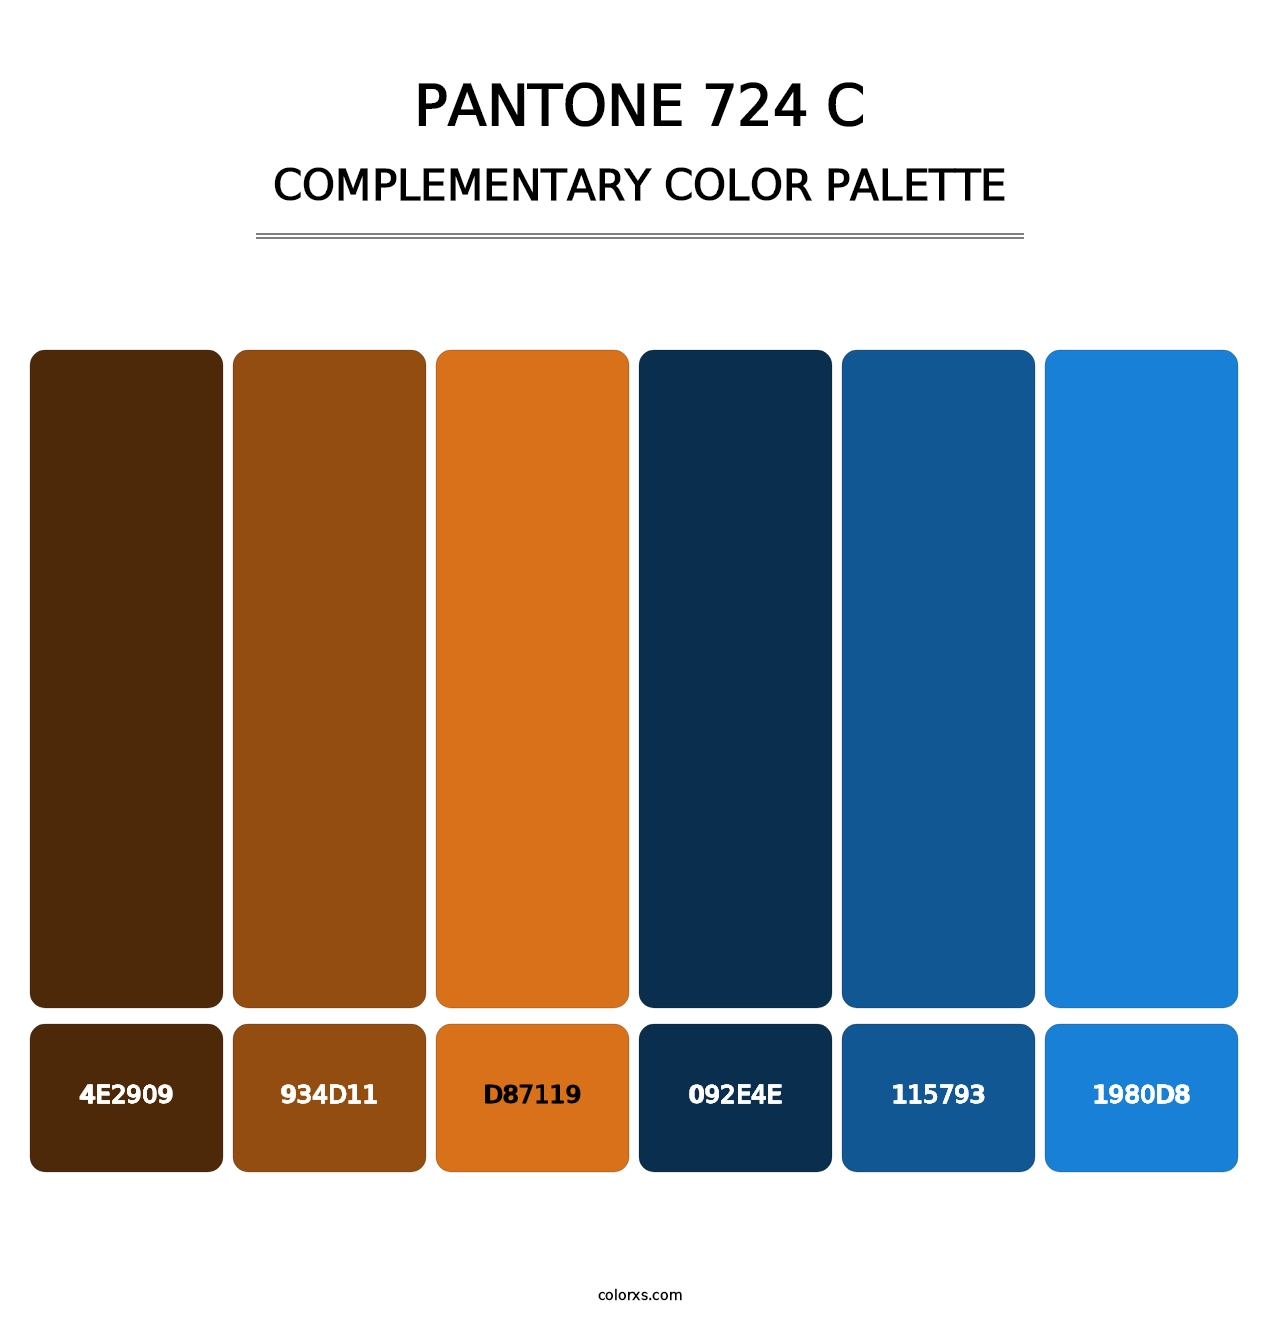 PANTONE 724 C - Complementary Color Palette